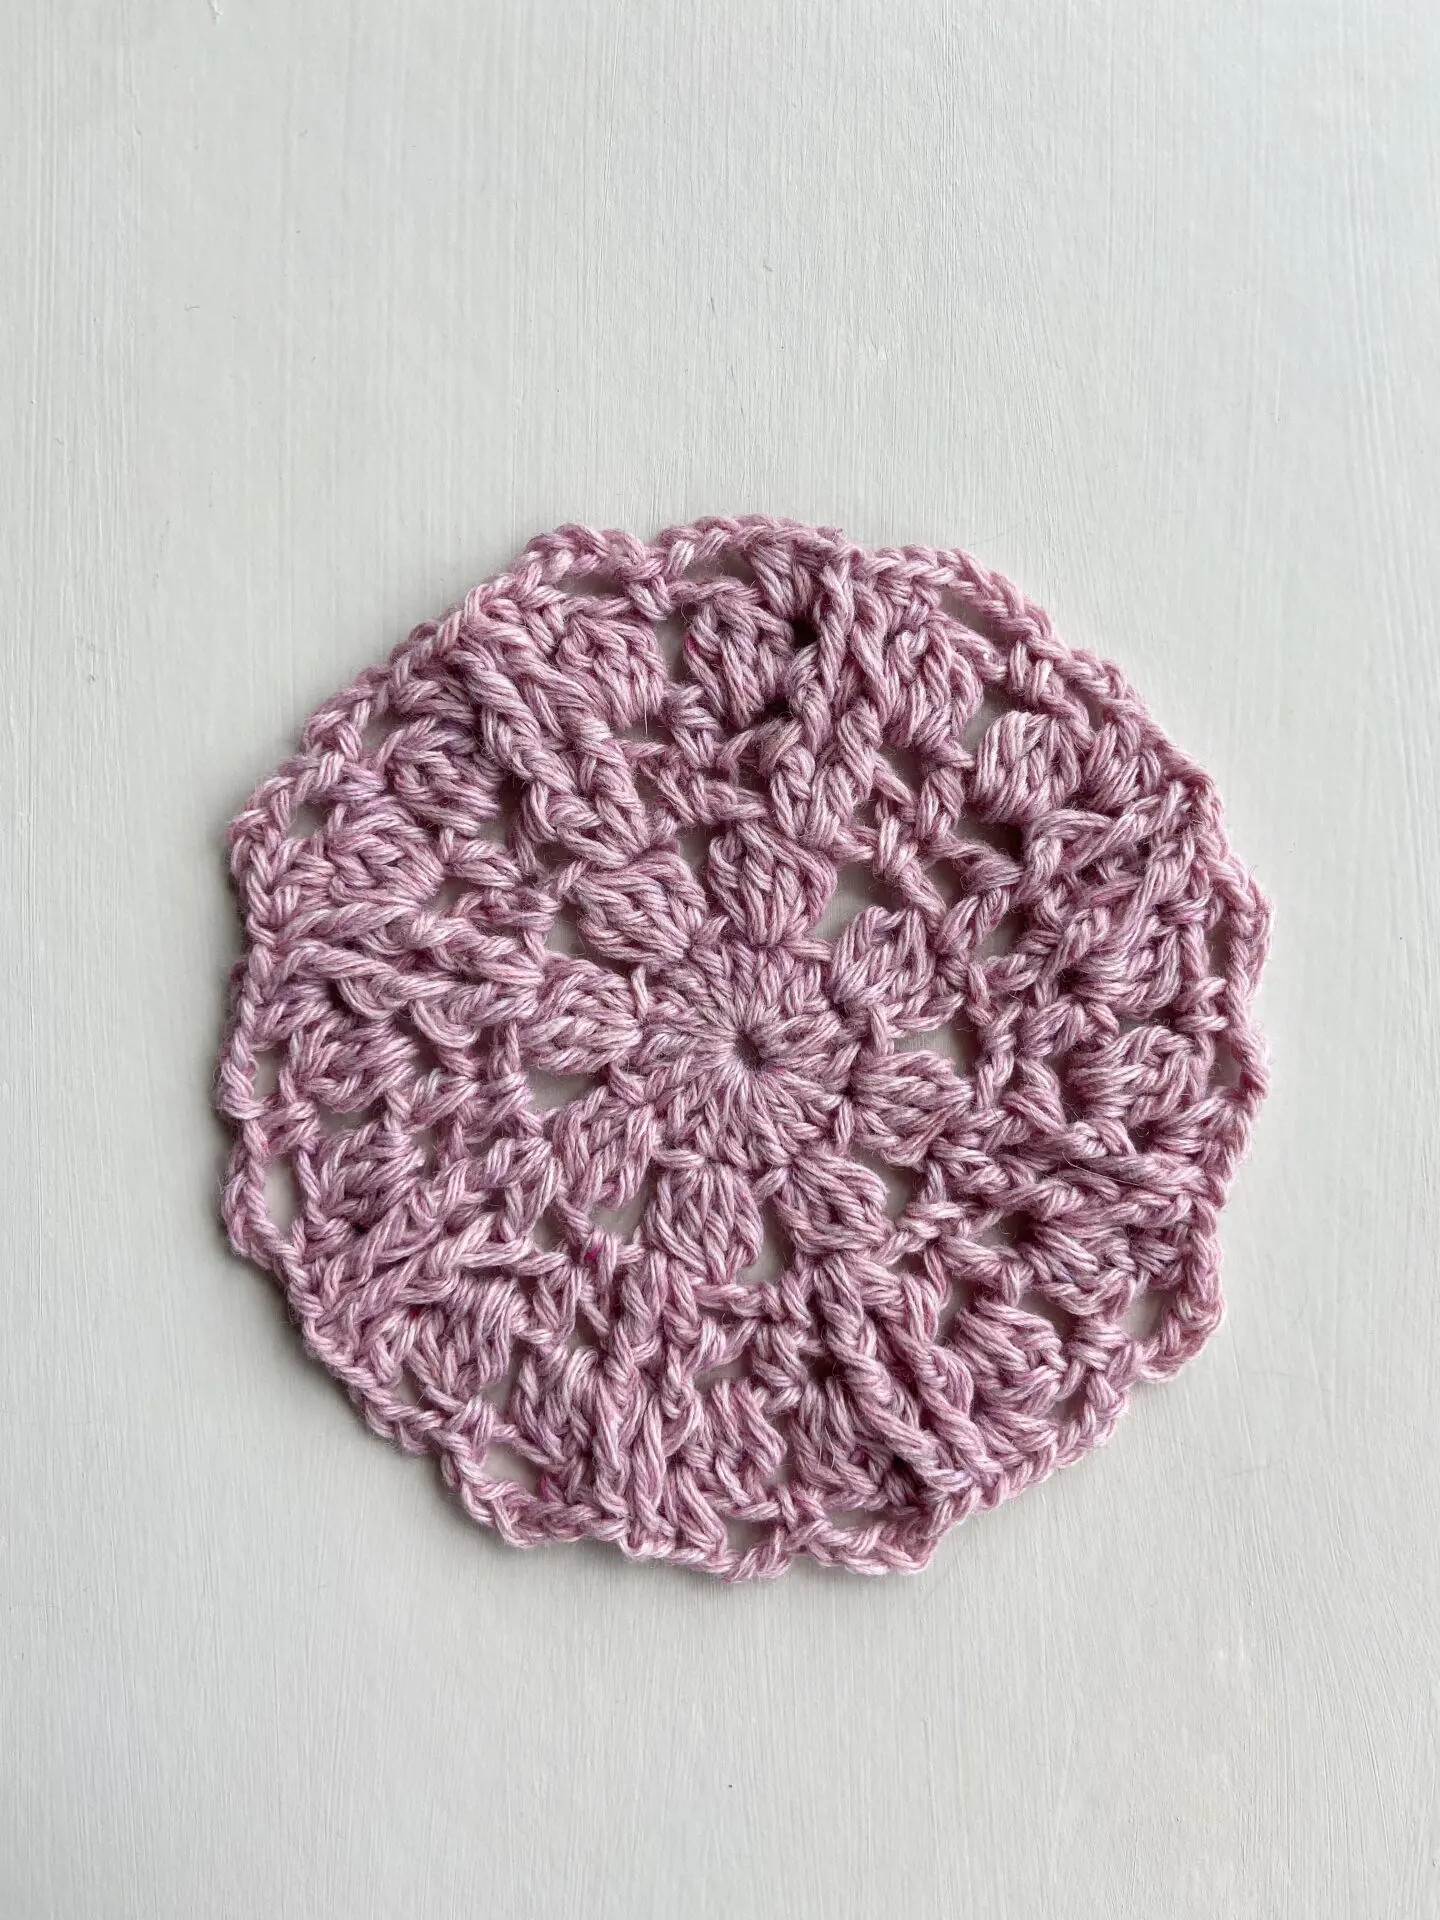 Lace Crochet Coaster Pattern 3. 